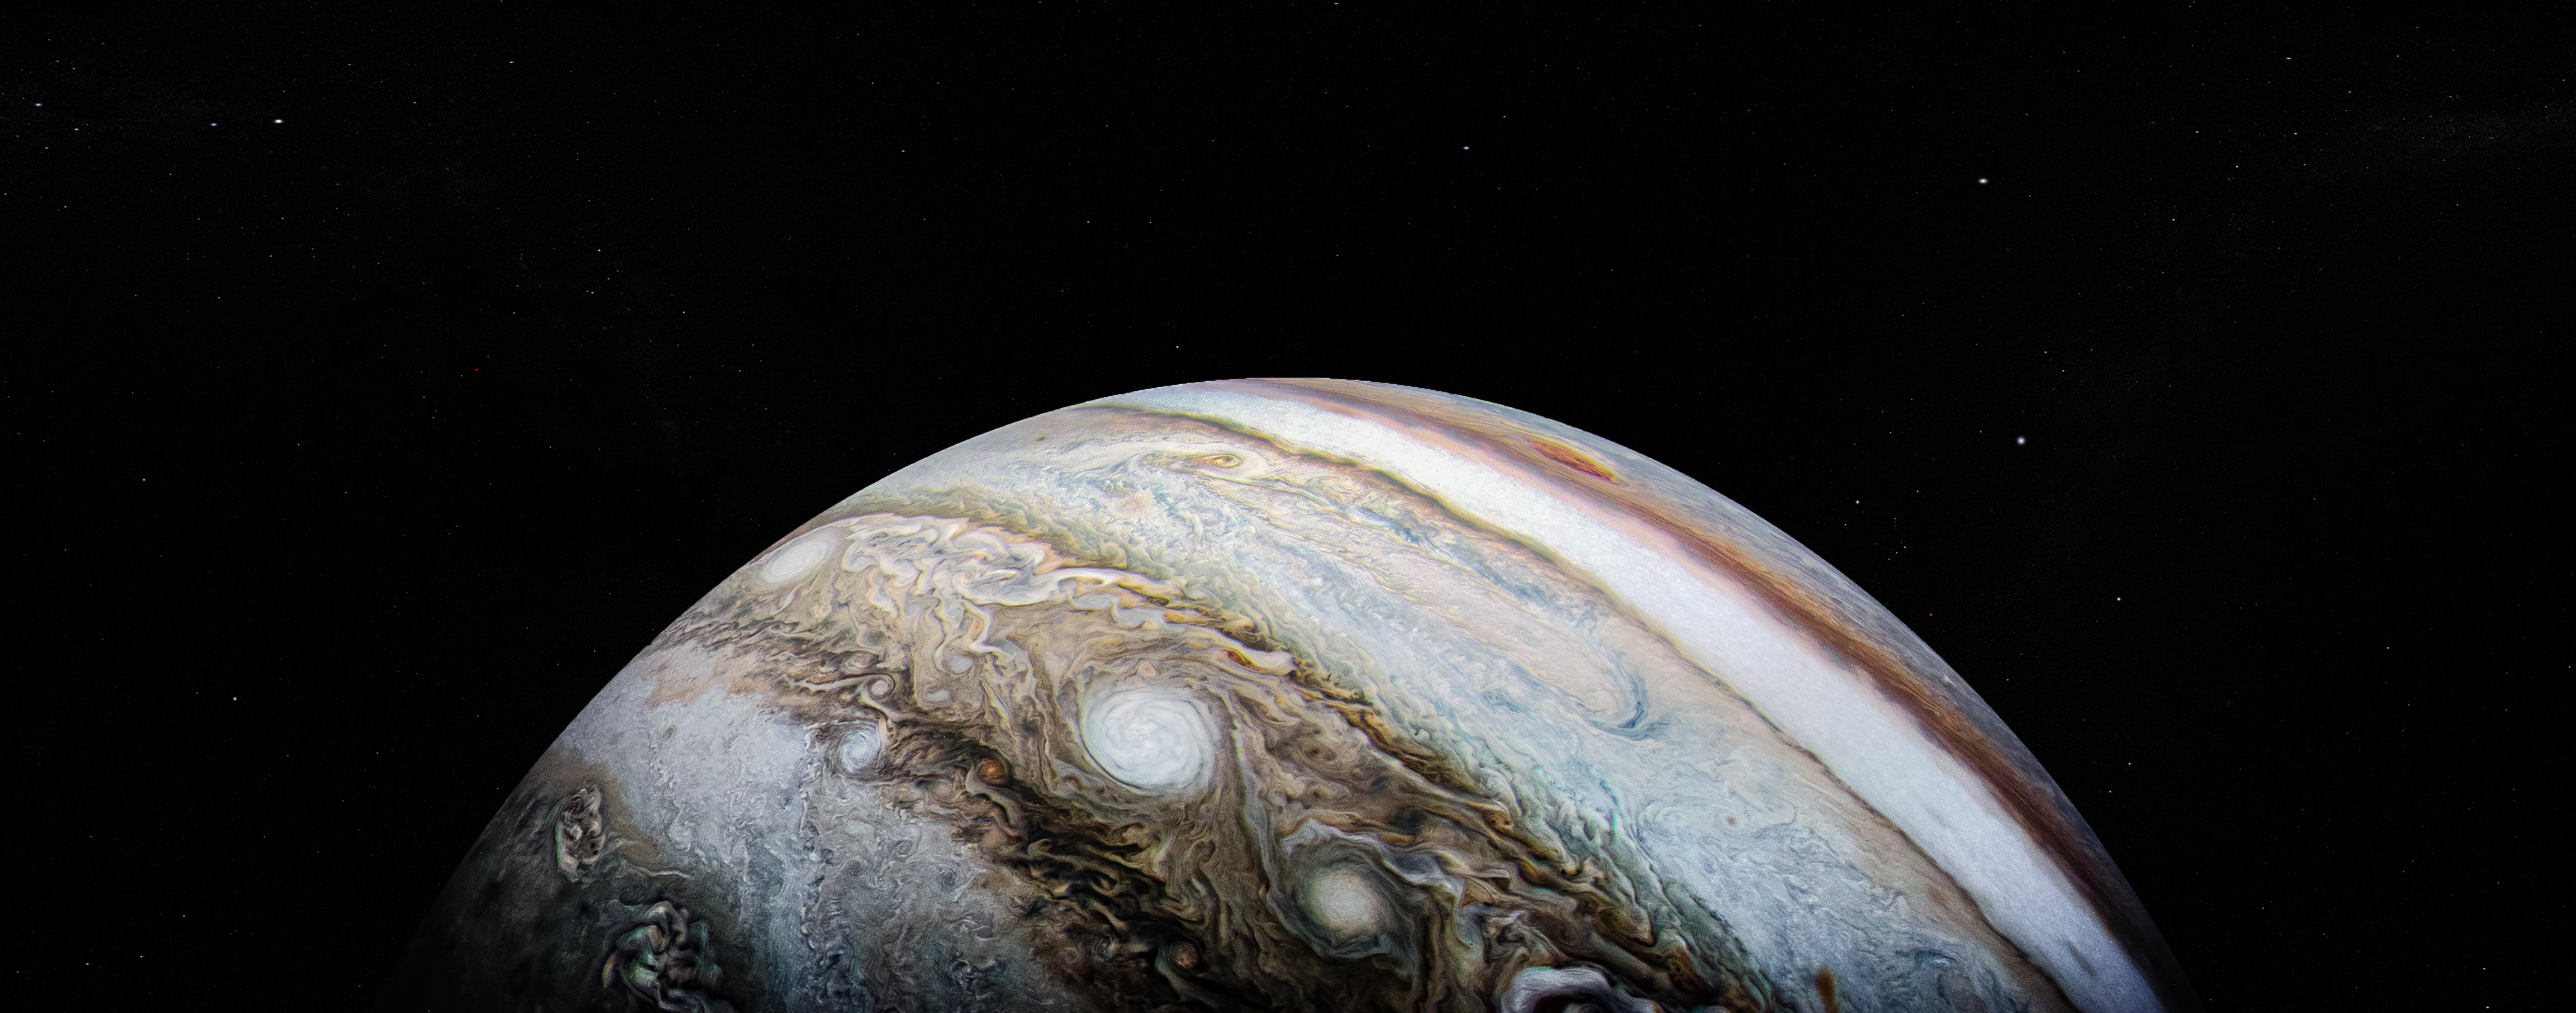 Space Jupiter Galaxy Planet 3440x1353